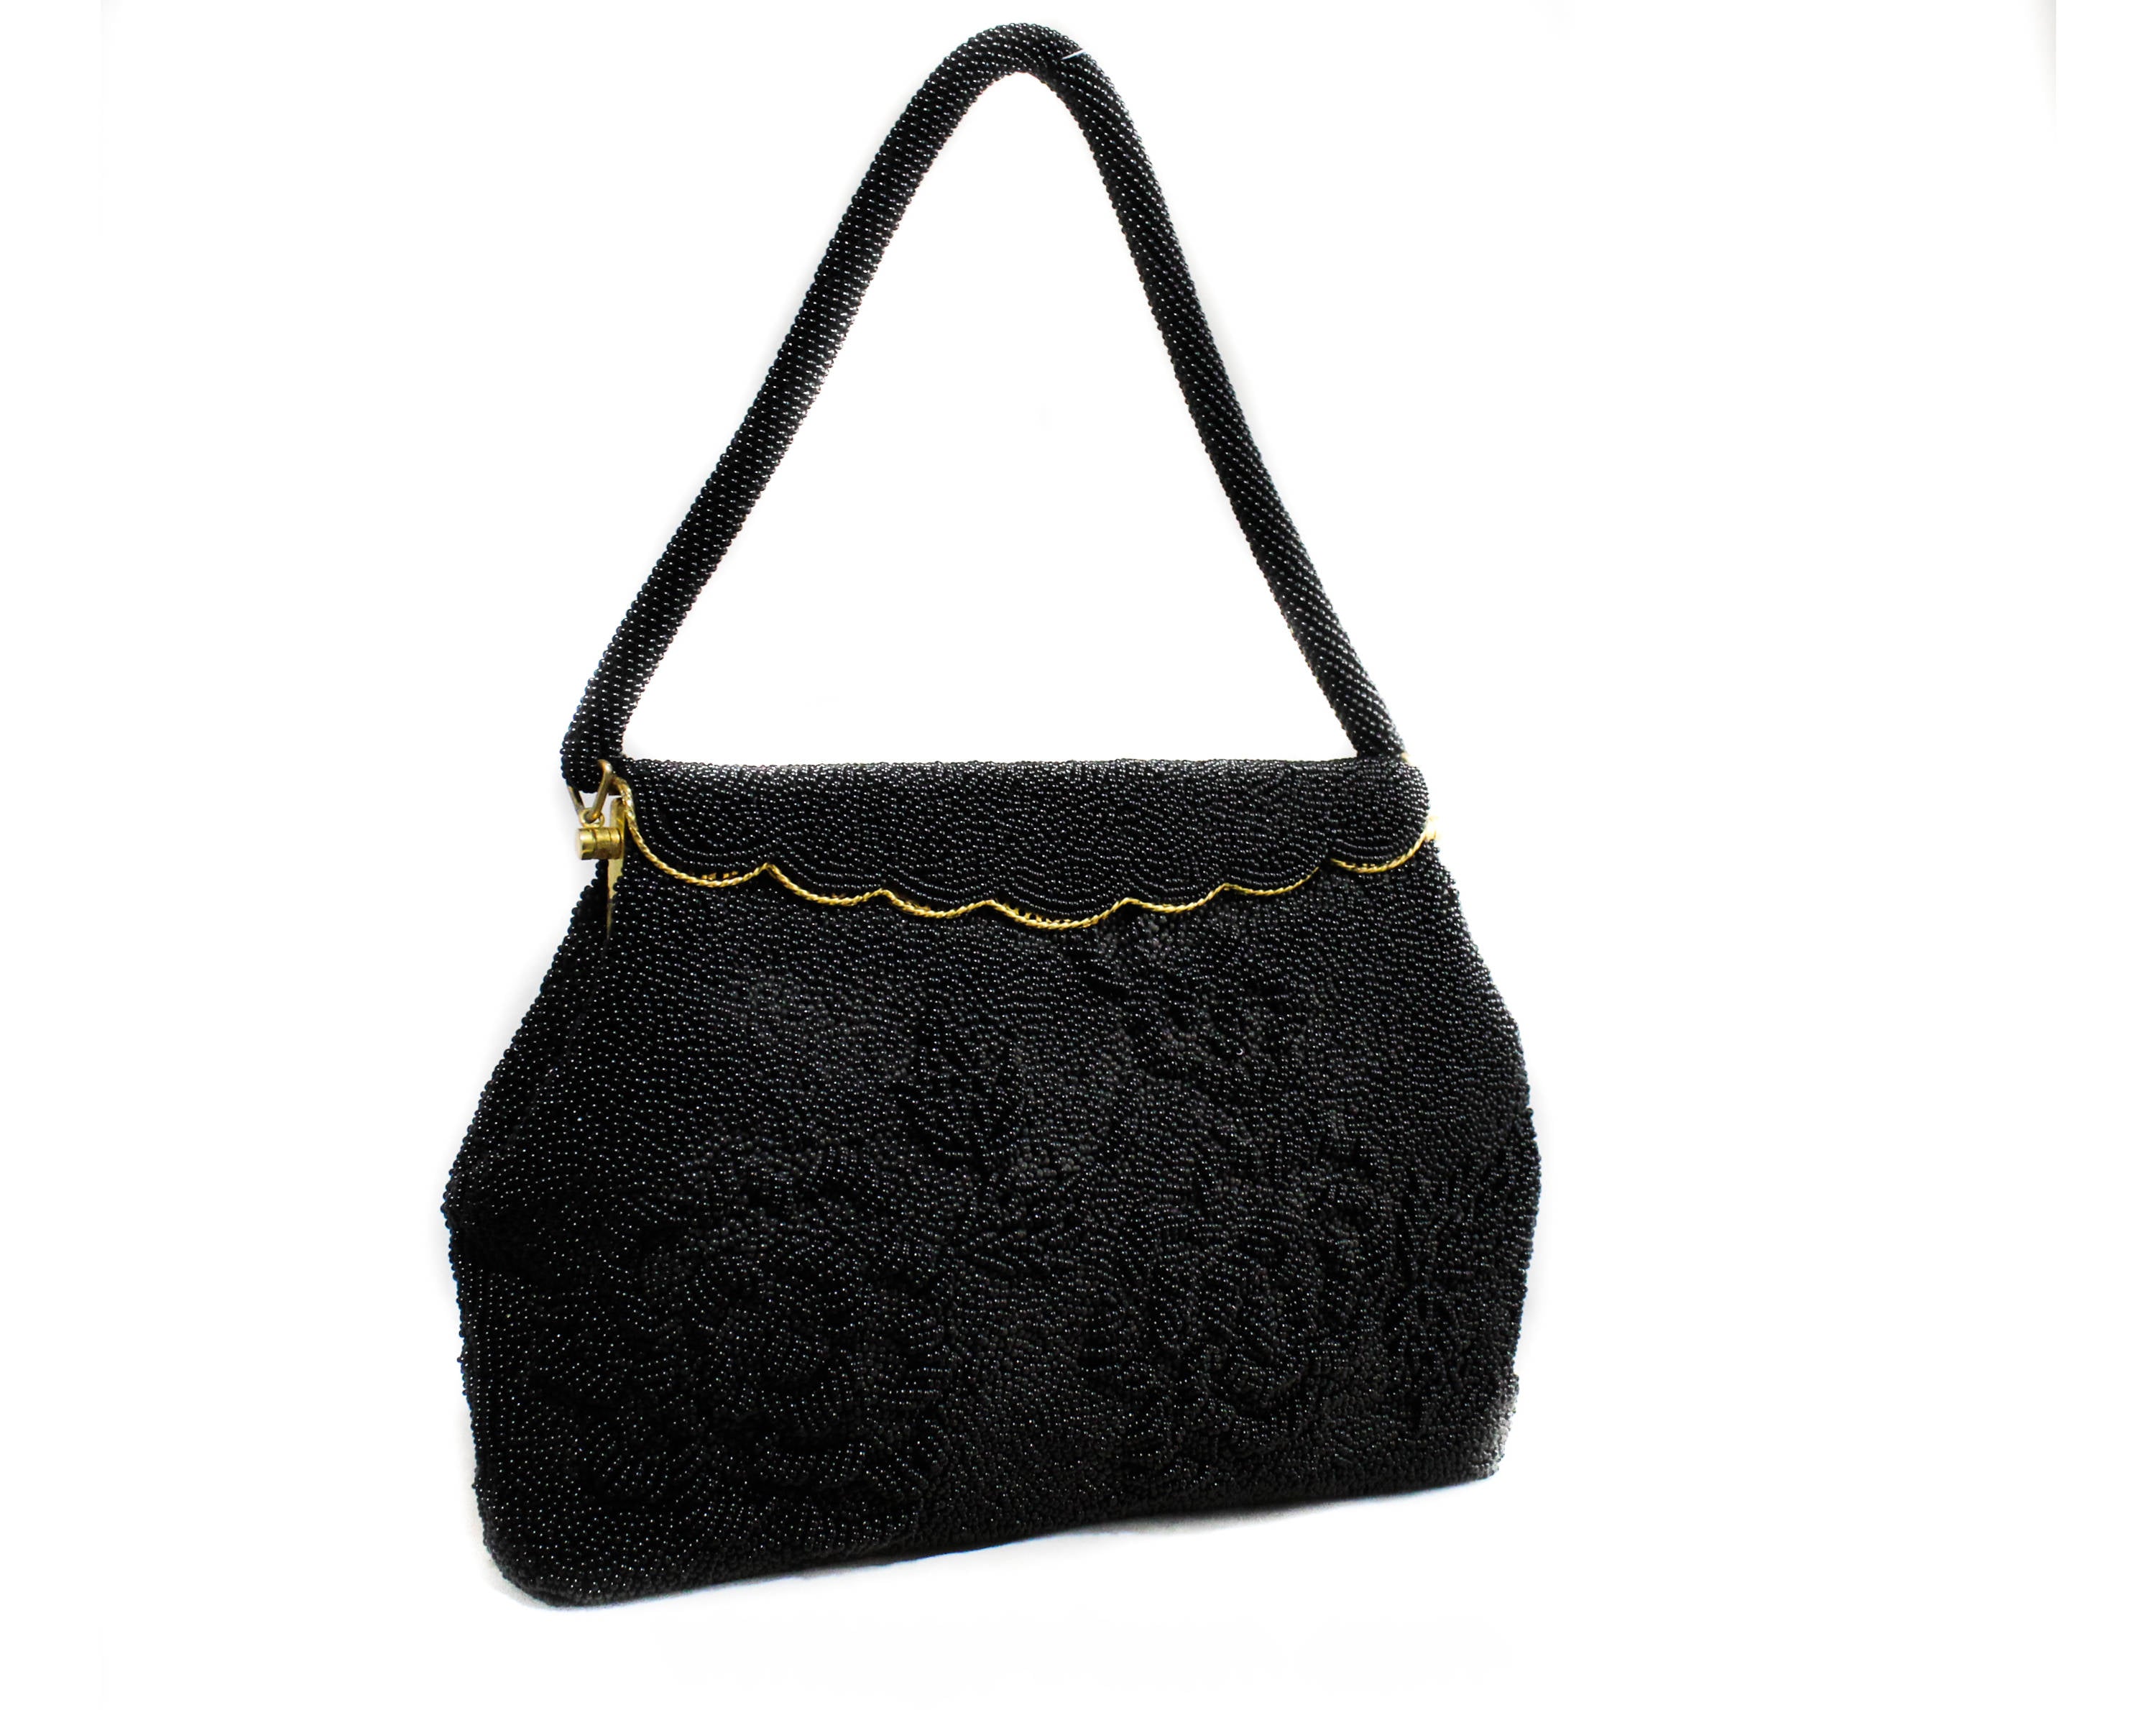 Black Beaded Evening Bag - 1950s Formal Purse - 50s 60s Caviar Beads H –  Vintage Vixen Clothing